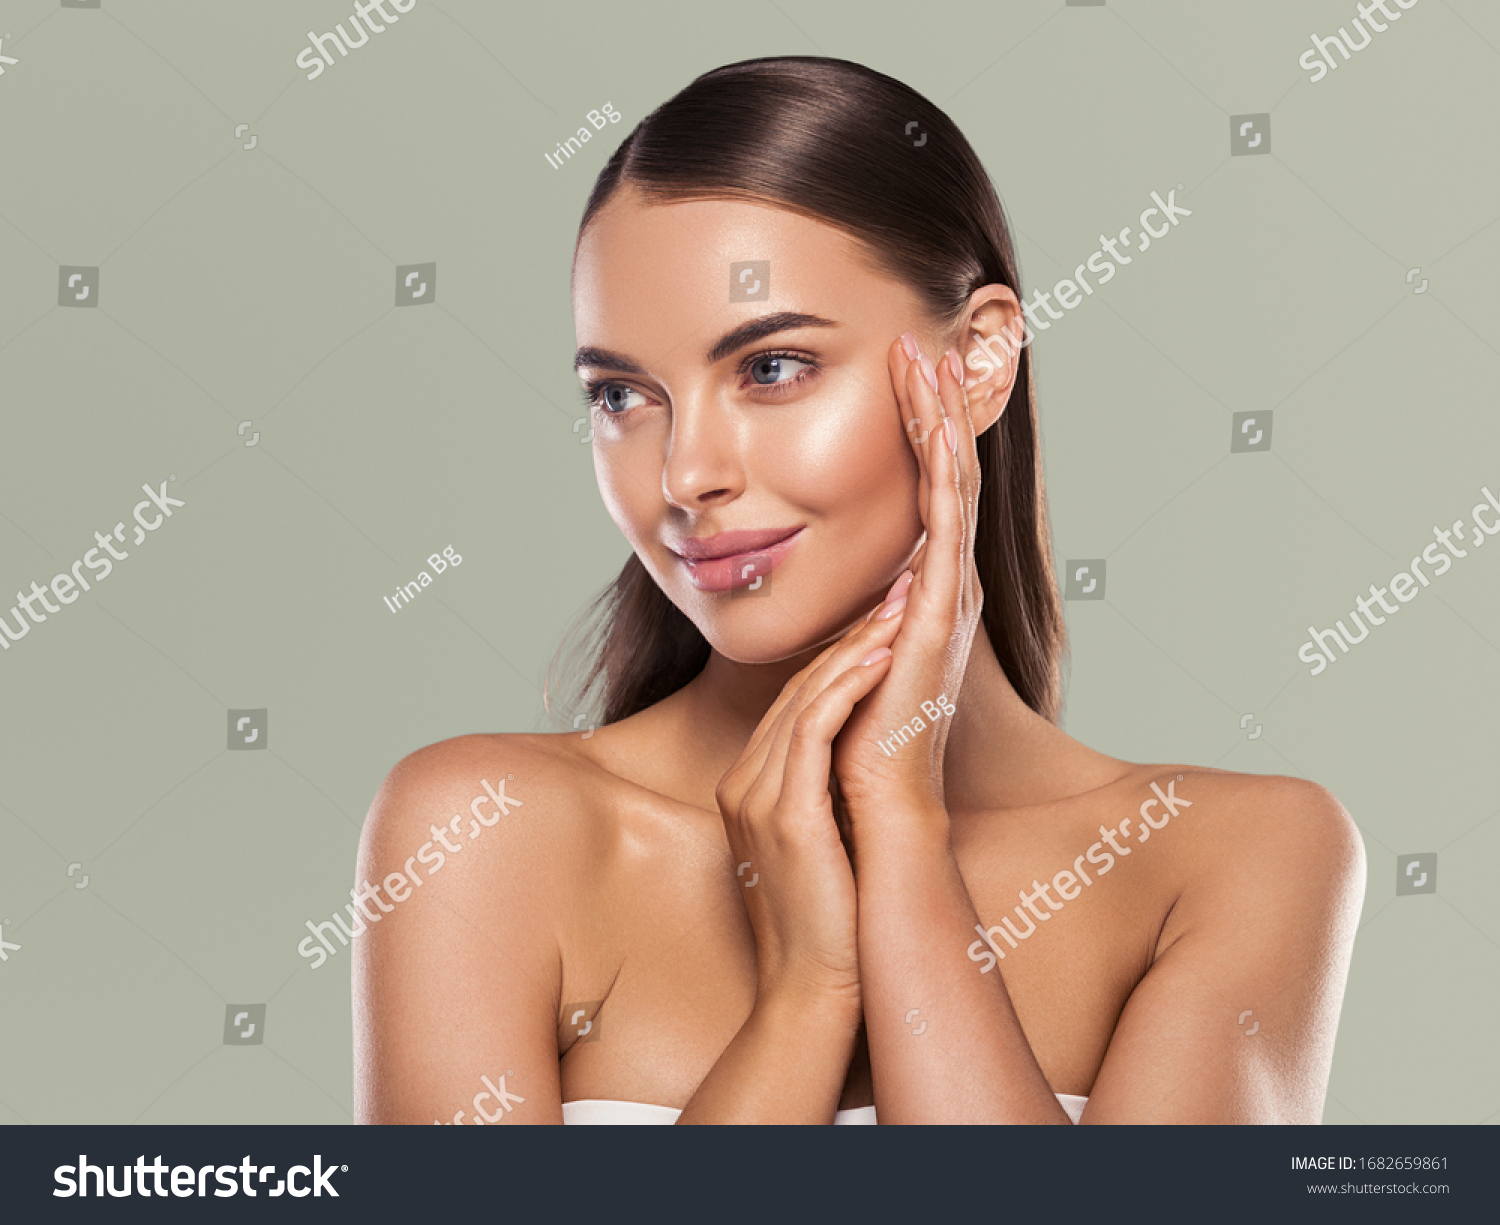 Beauty woman clean healthy skin natural make up spa concept long smooth hair #1682659861